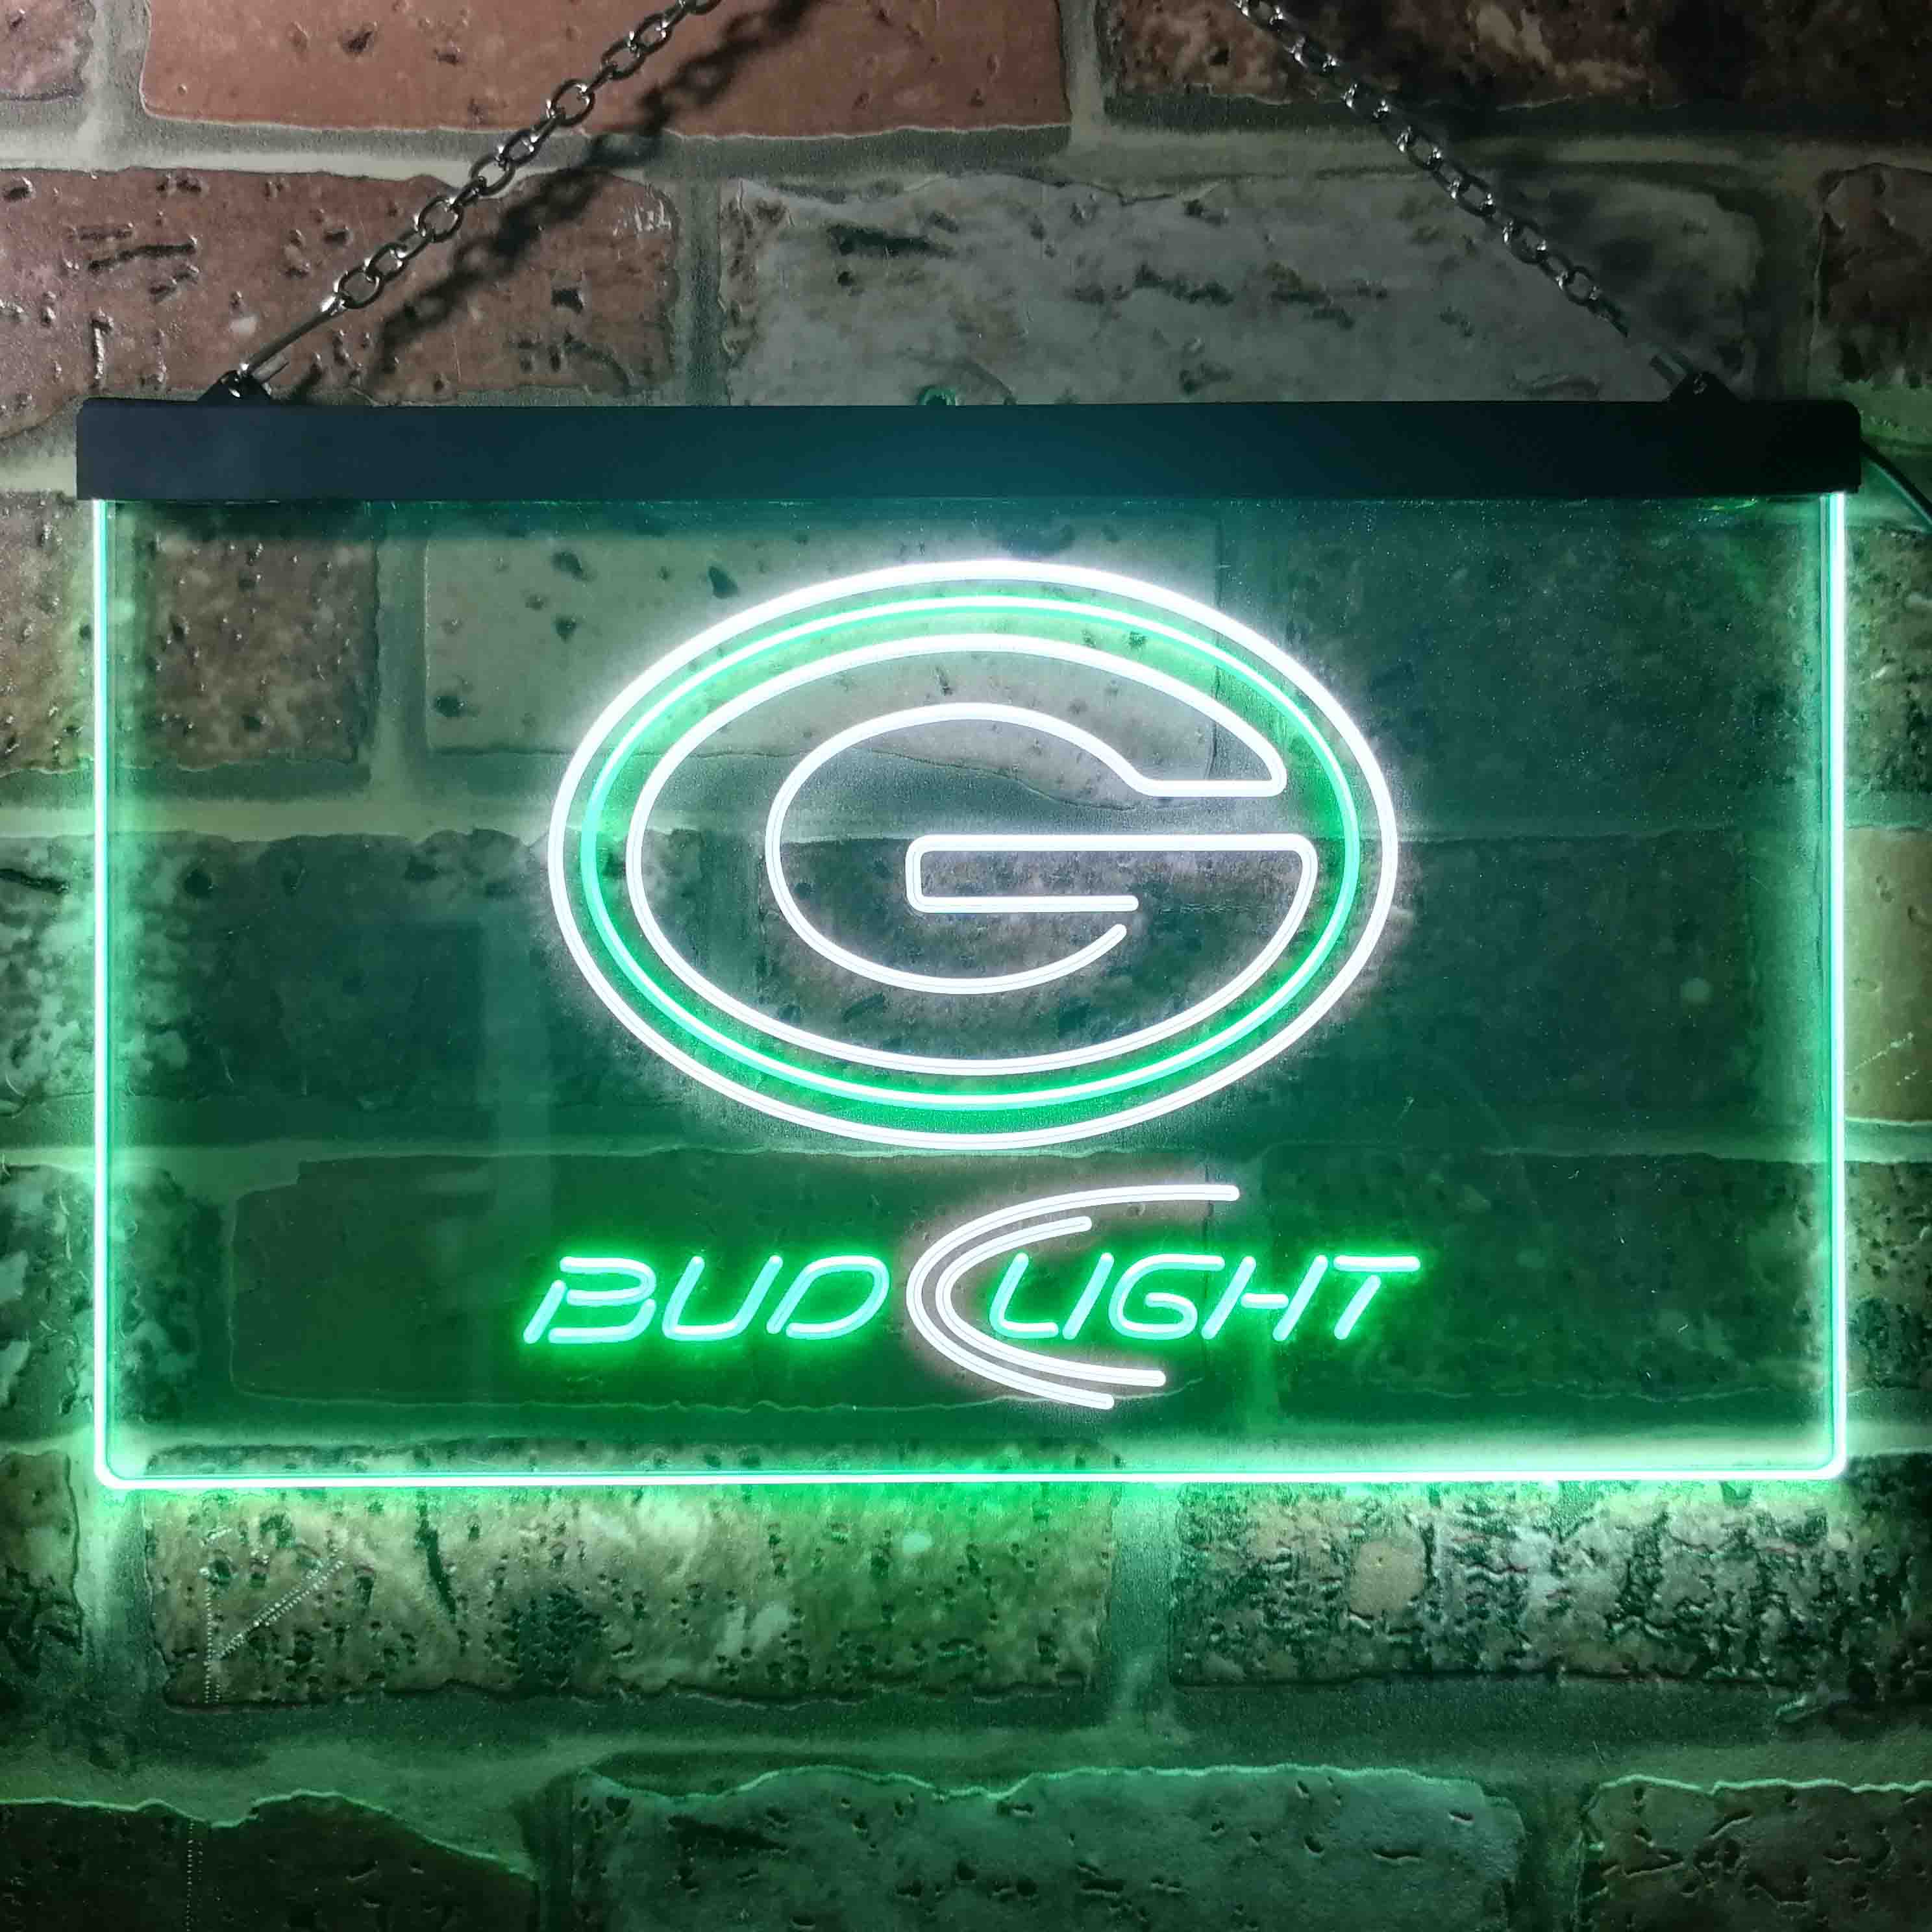 Green Bay Packers Bud Light Neon-Like LED Sign